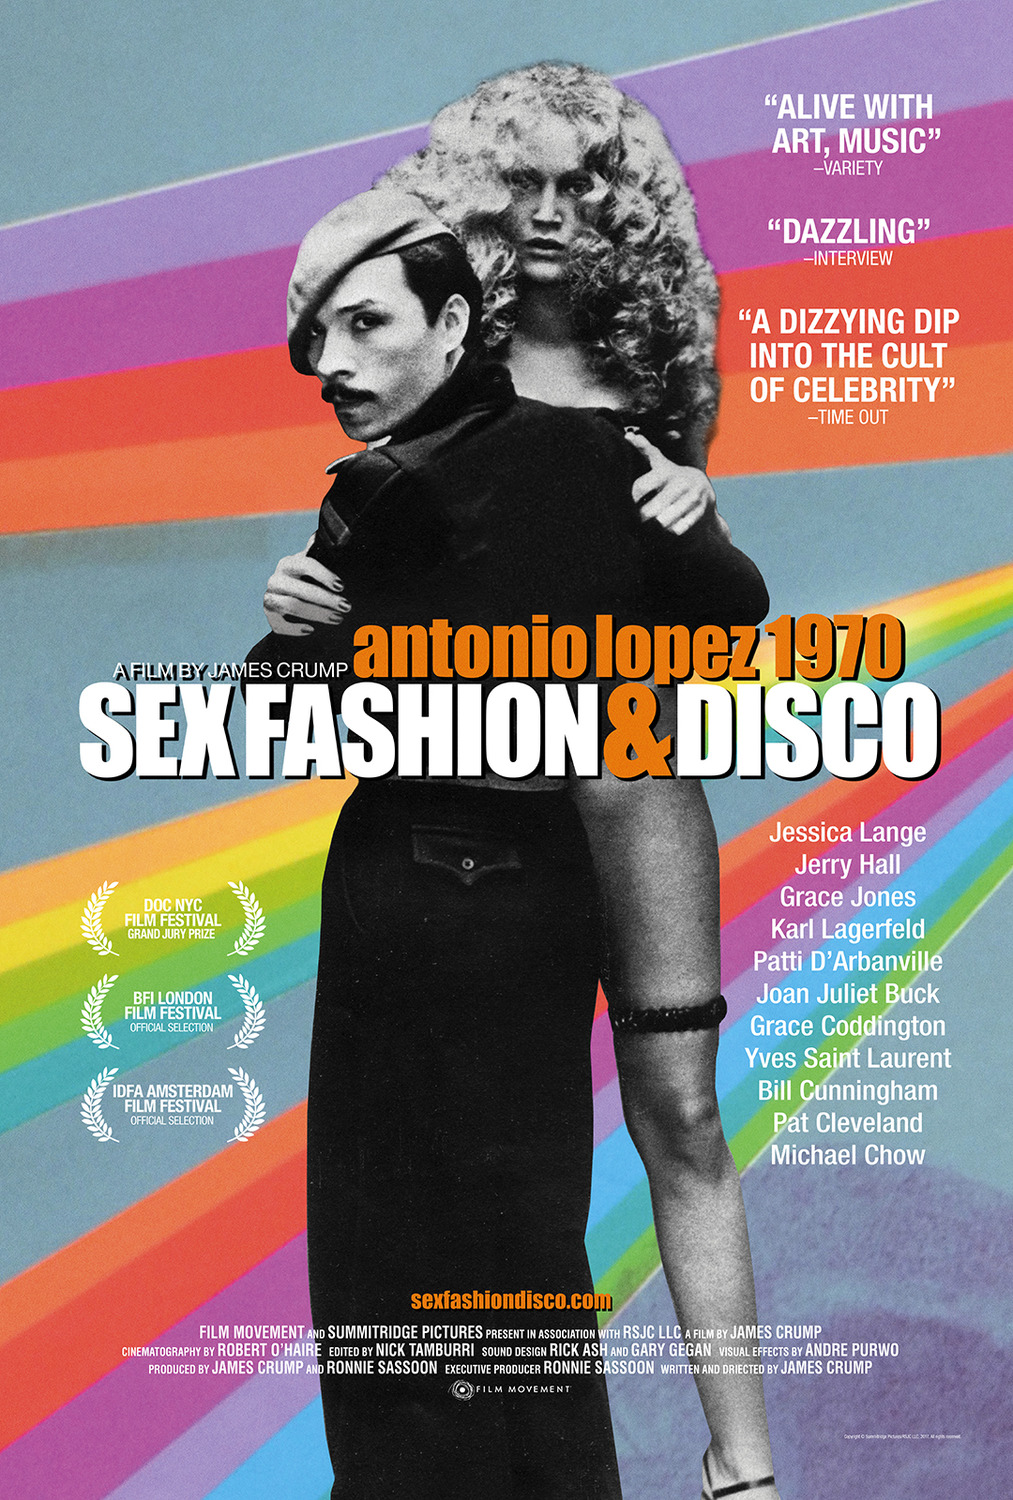 Extra Large Movie Poster Image for Antonio Lopez 1970: Sex Fashion & Disco 